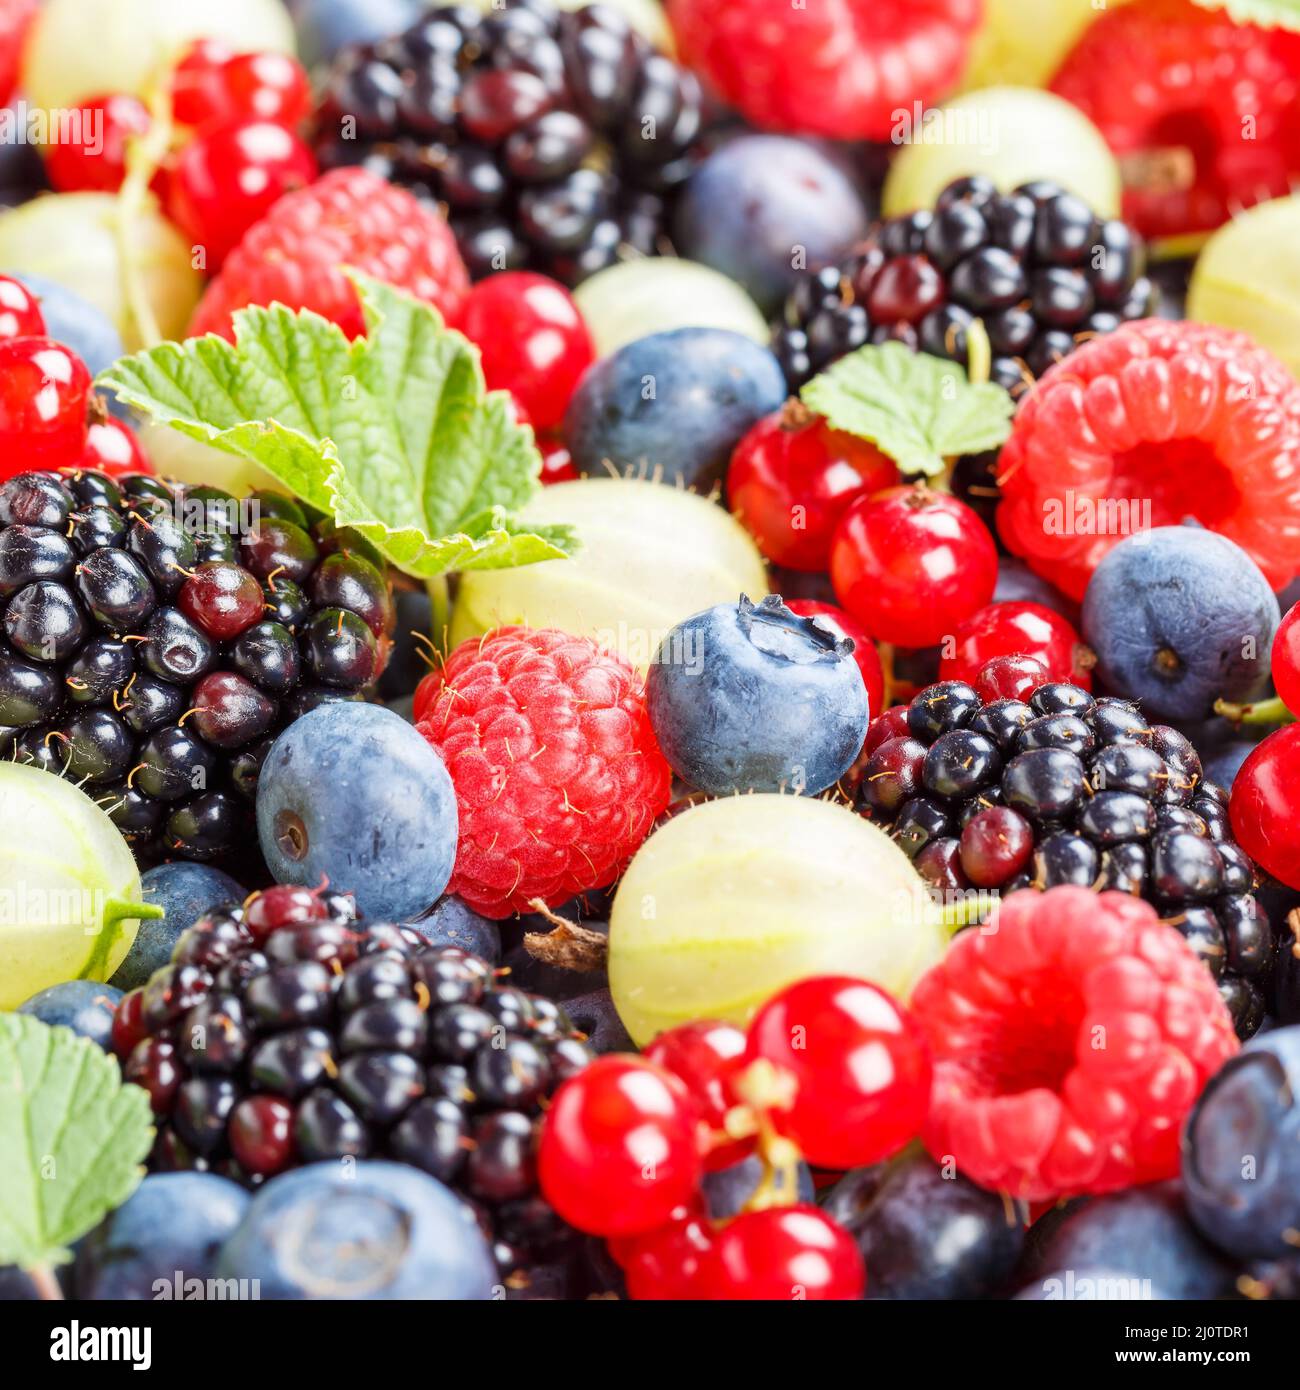 Berries fruits berry fruit like strawberries strawberry fresh blueberries blueberry square Stock Photo